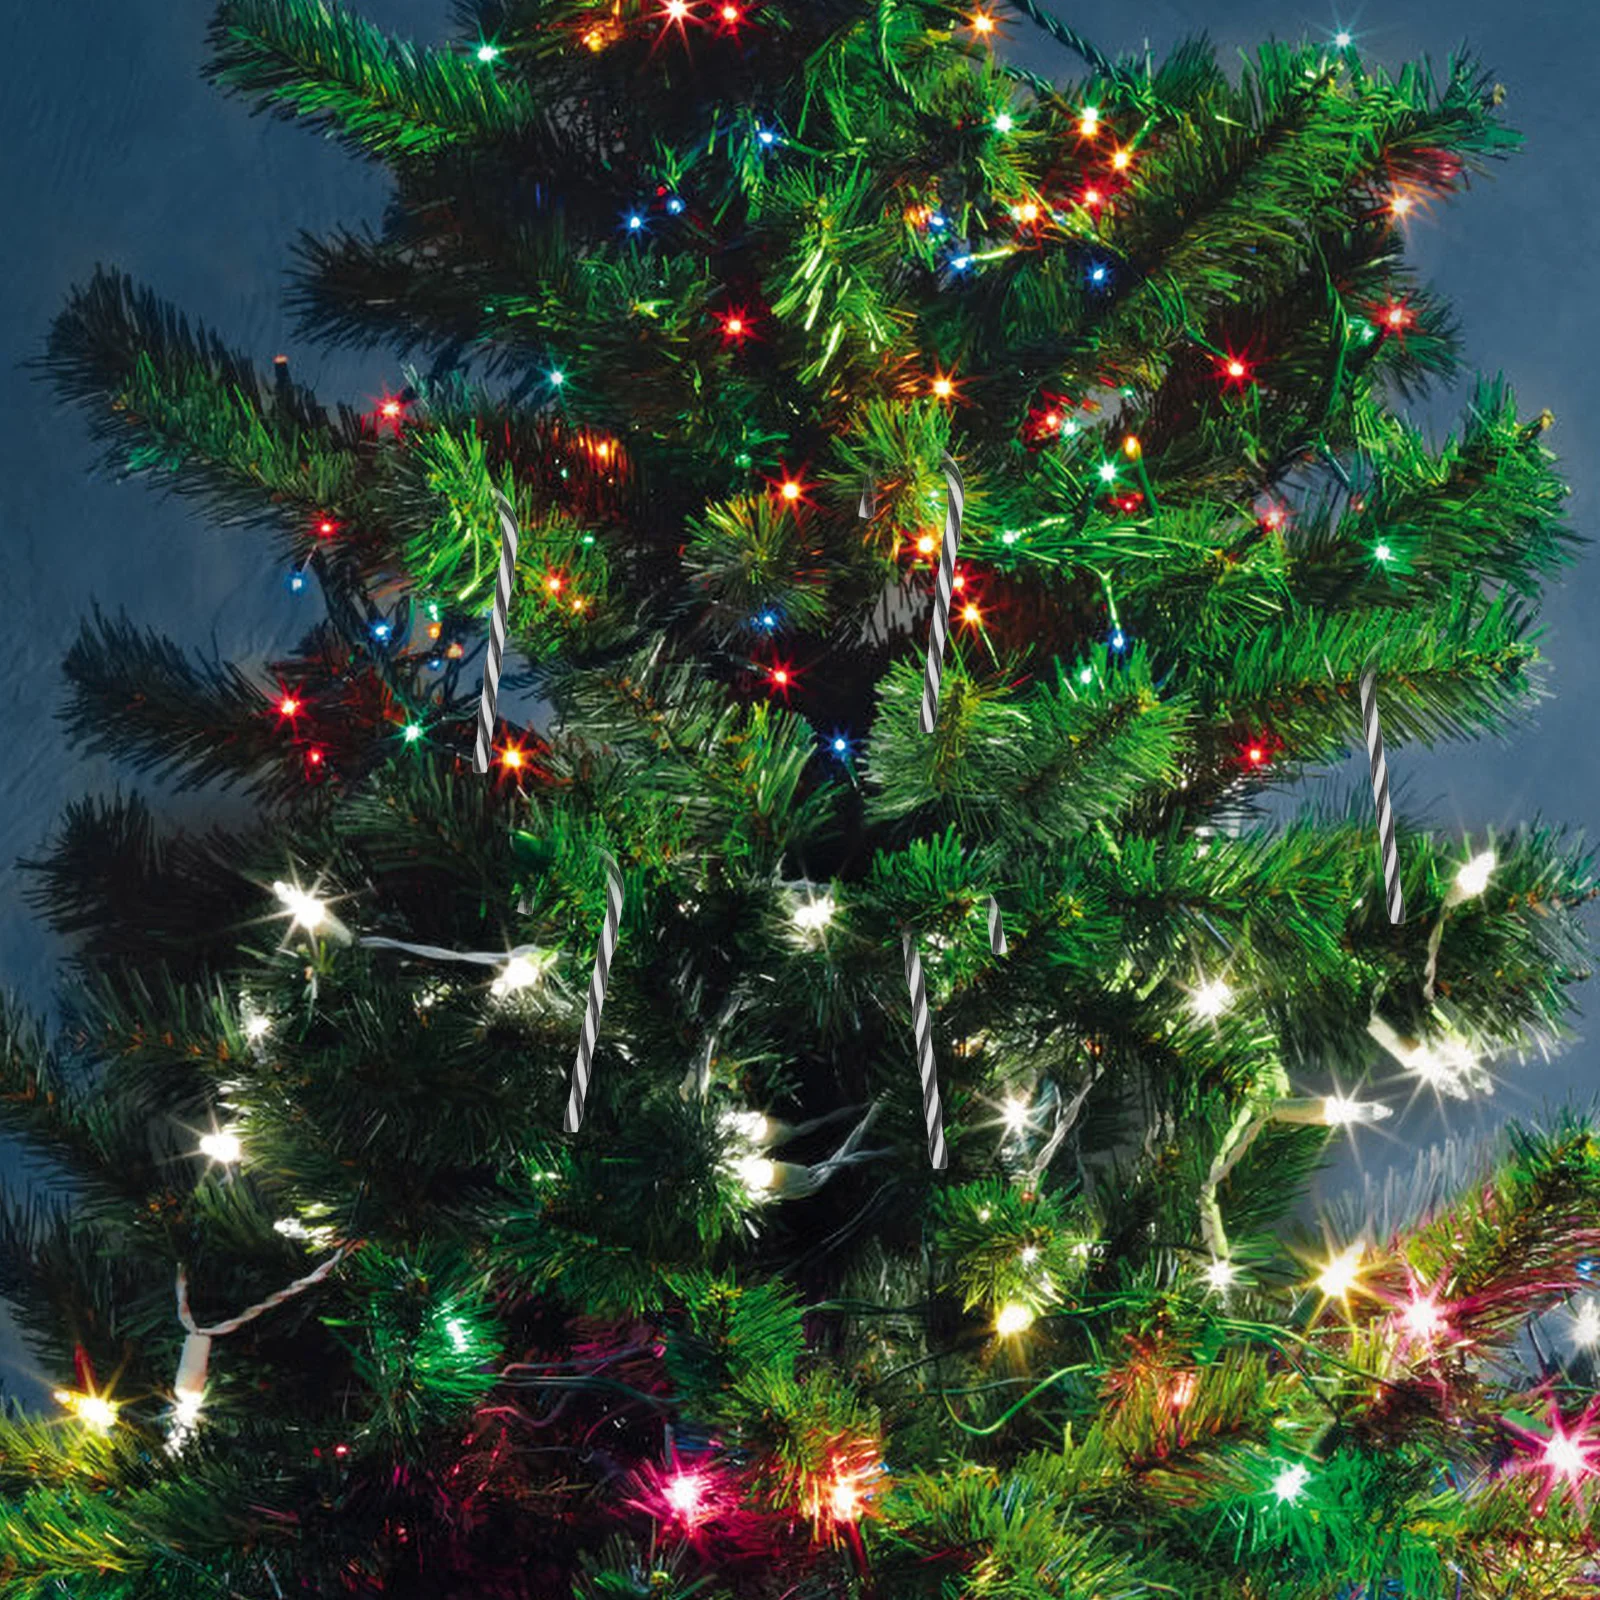 

10pcs Candy Cane Decor Christmas Windmill Xmas Tree Ornaments Party Favors